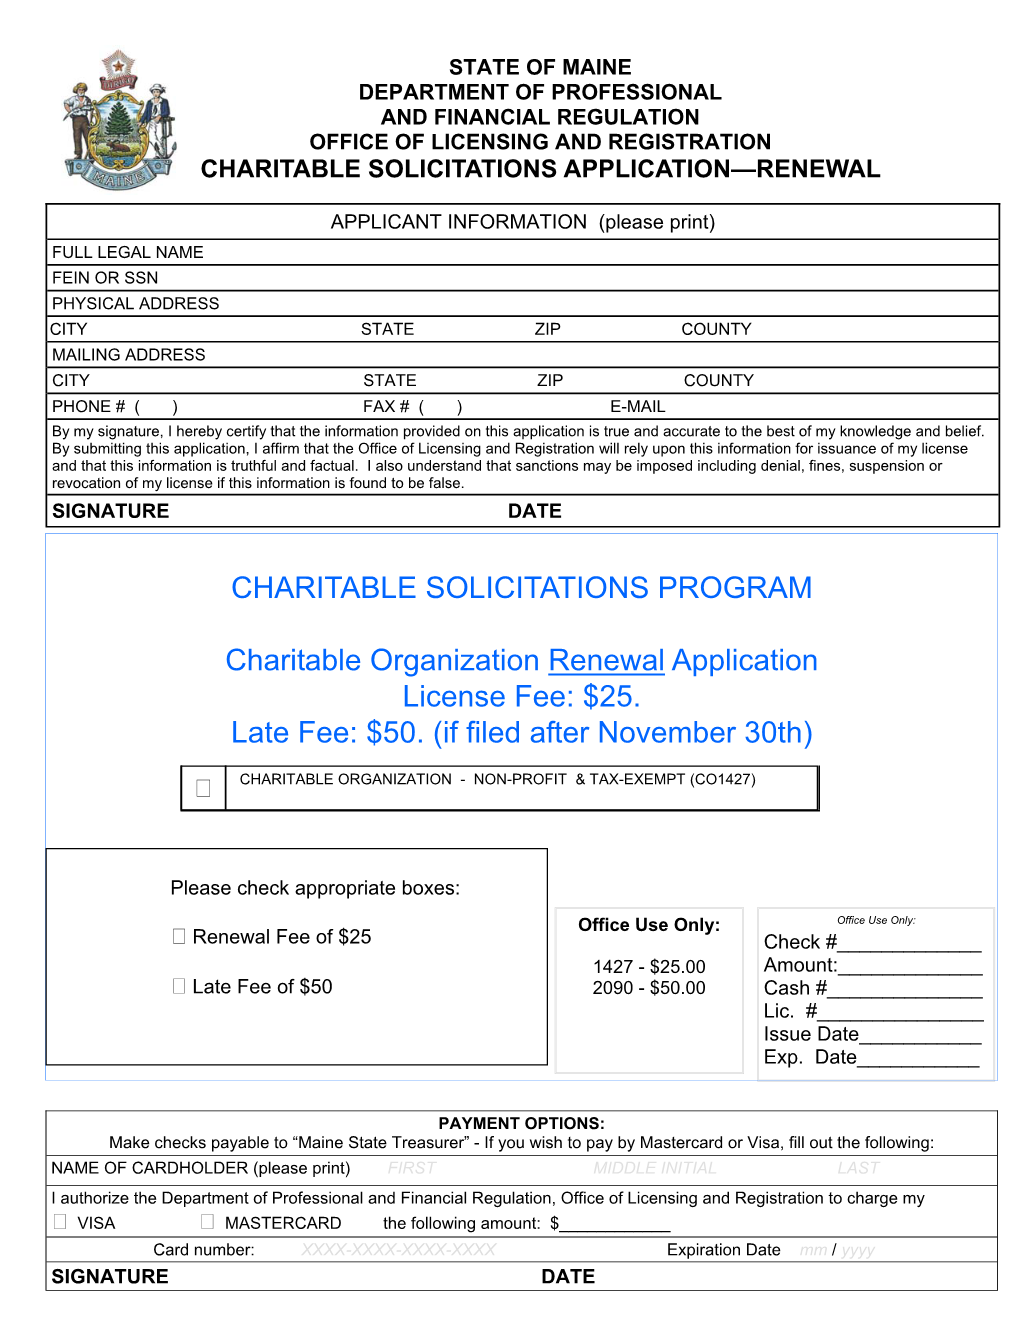 Charitable Solicitations Application—Renewal